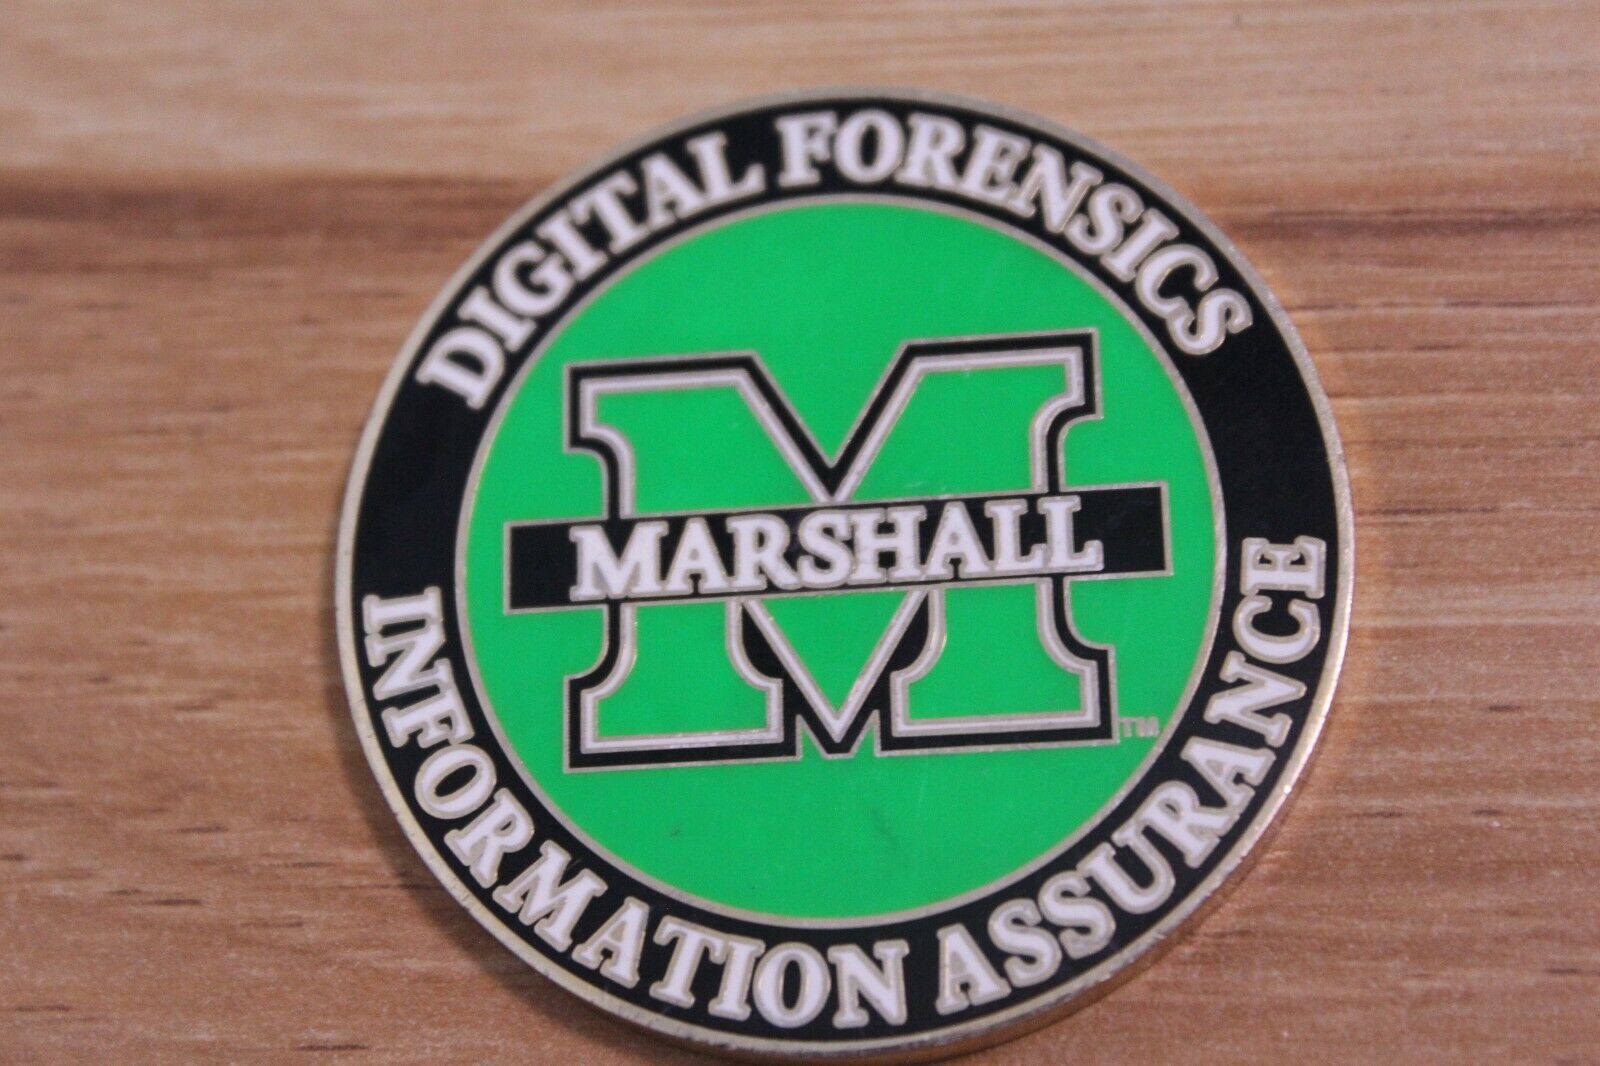 Digital Forensics Information Assurance Challenge Coin